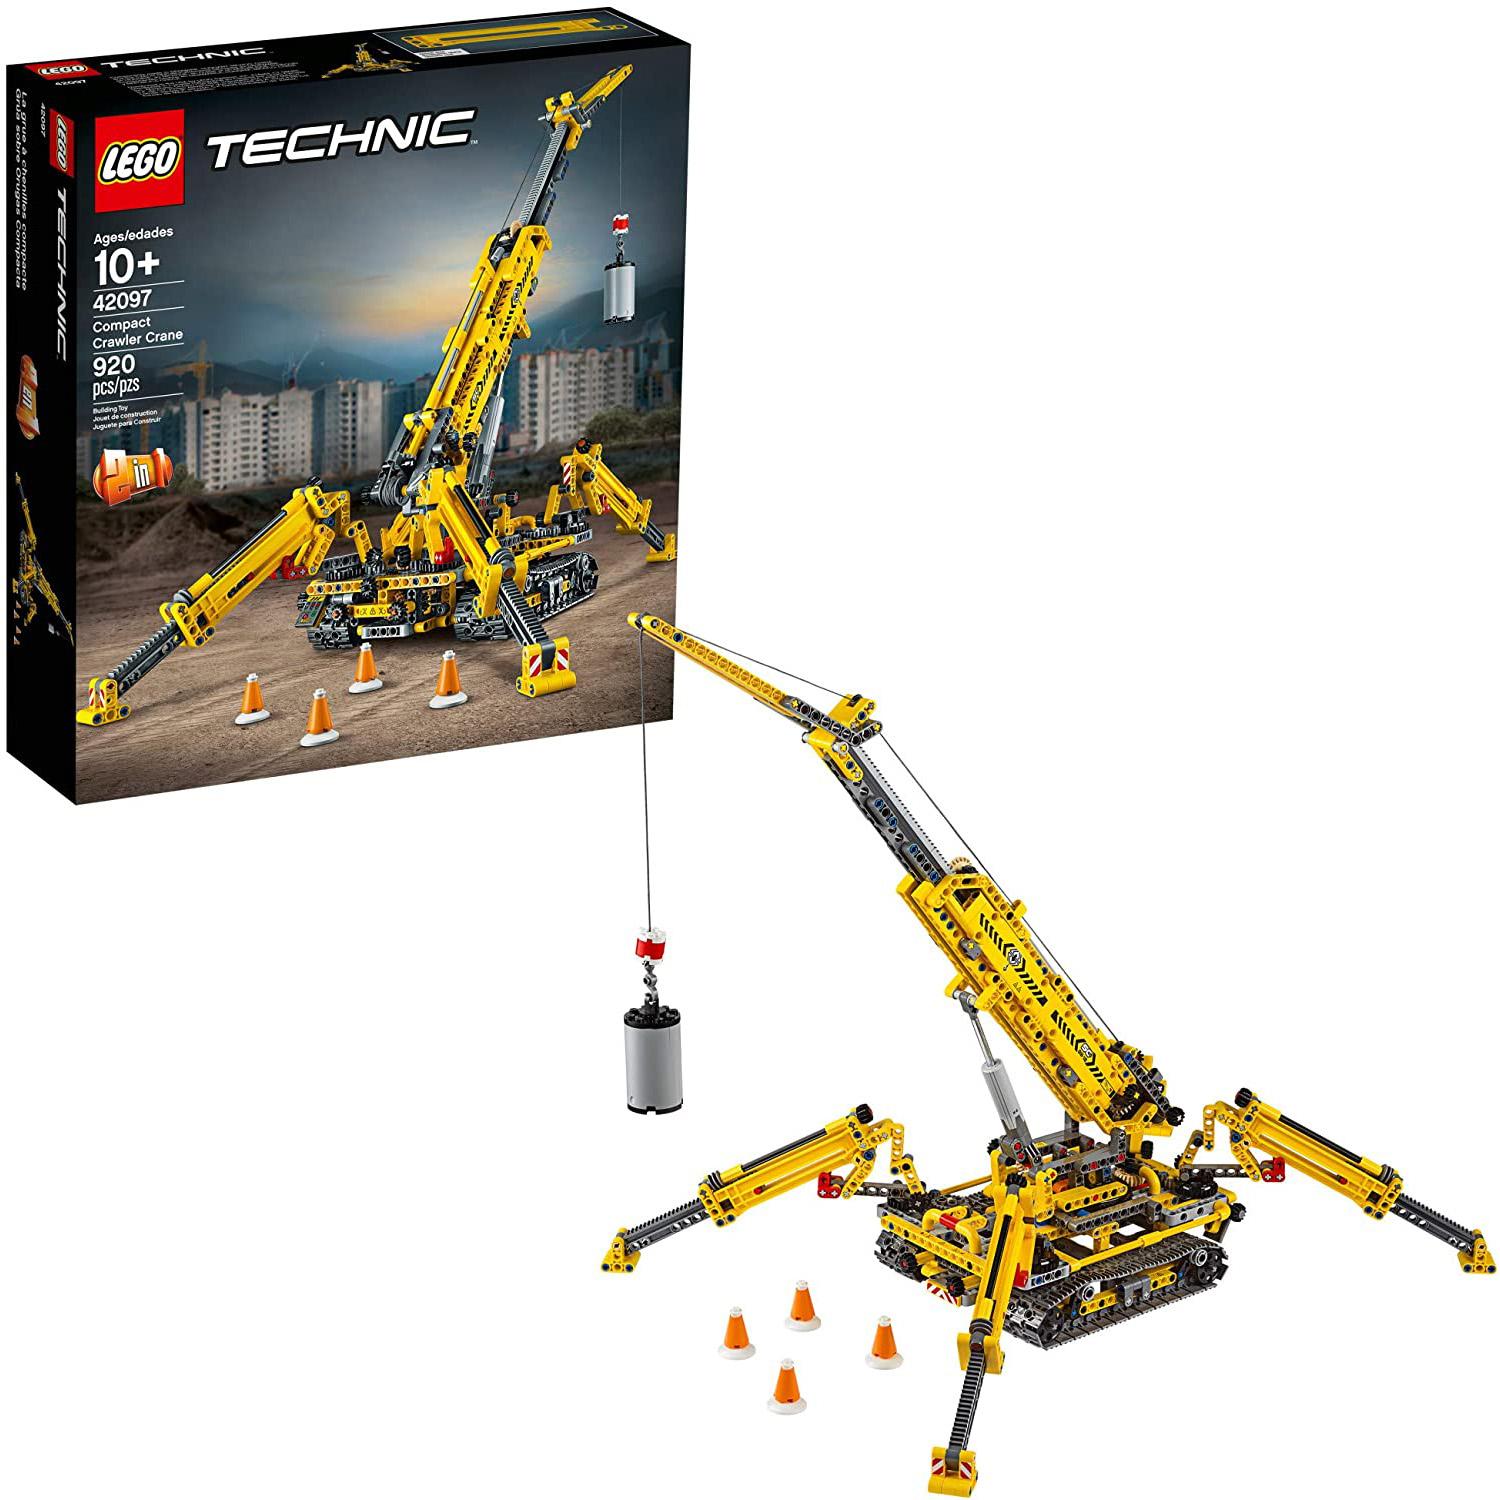 920-Piece LEGO Technic Compact Crawler Crane Building Set for $74.99 Shipped